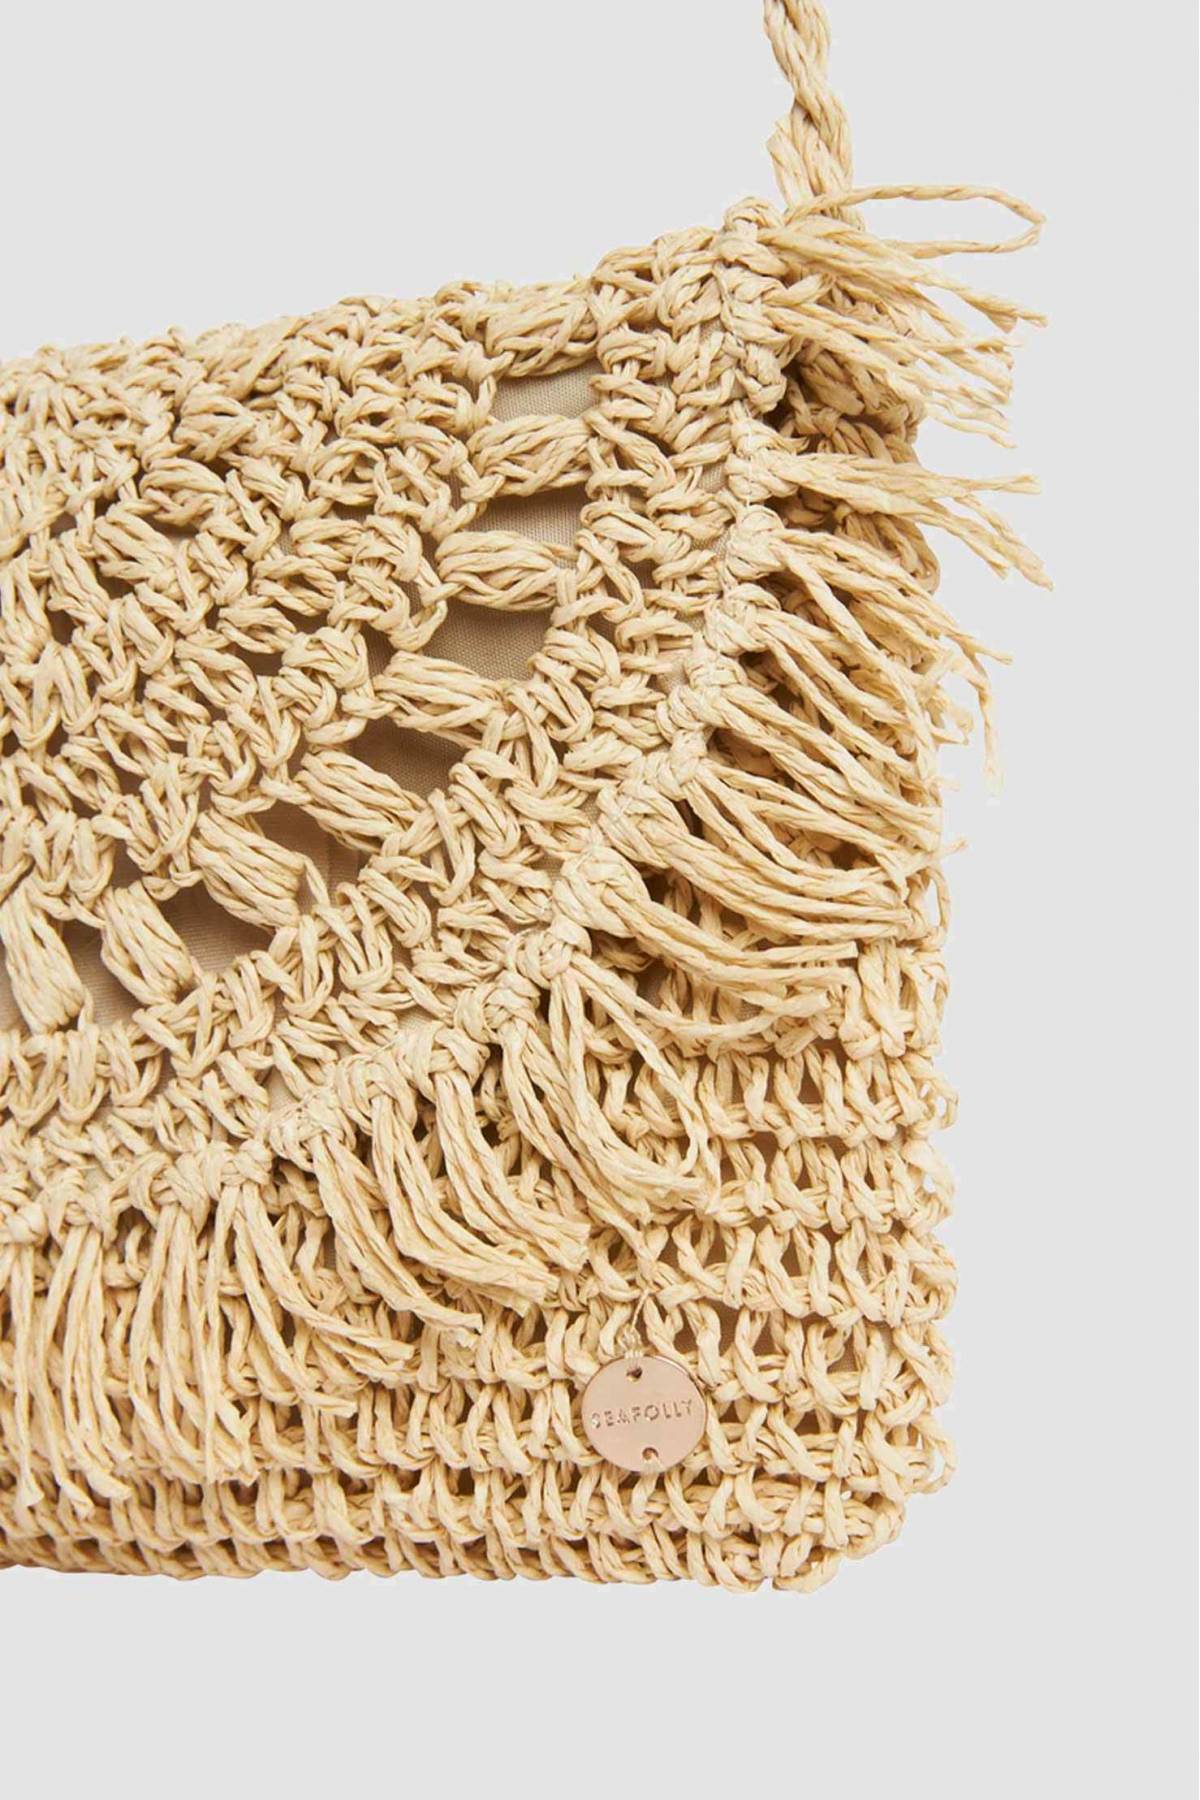 Seafolly Crochet Bag